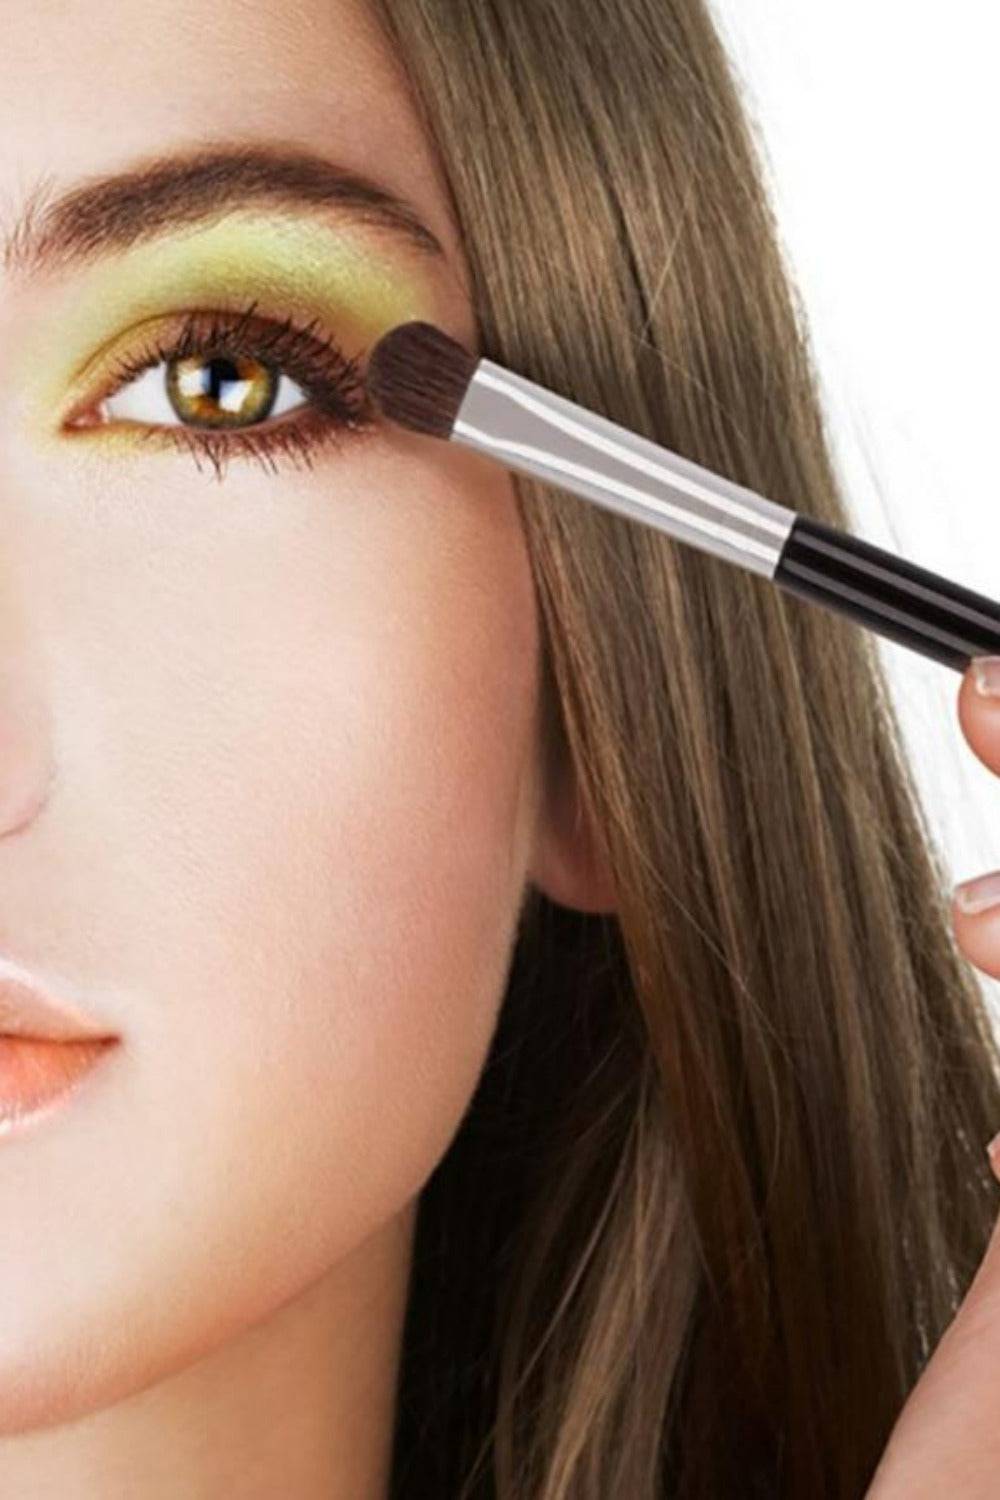 Wood Handle Cosmetic Eyeshadow Makeup Brush Set - TGC Boutique - Makeup Brush Set